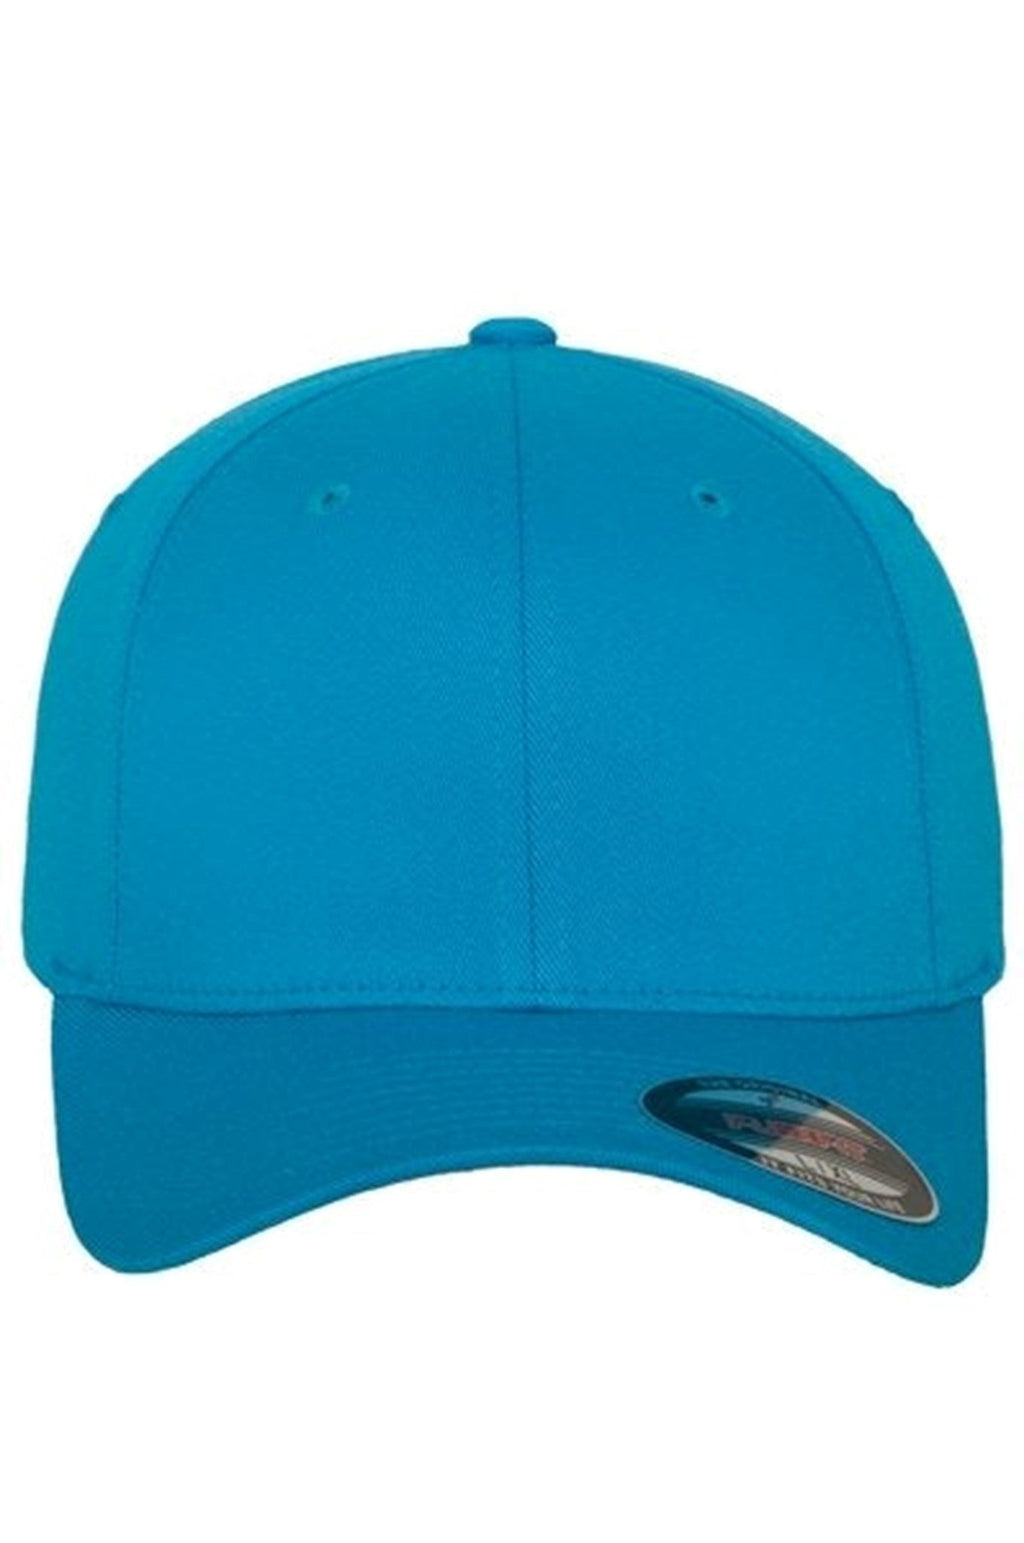 Flexfit Original Baseball Cap - Τυρκουάζ μπλε